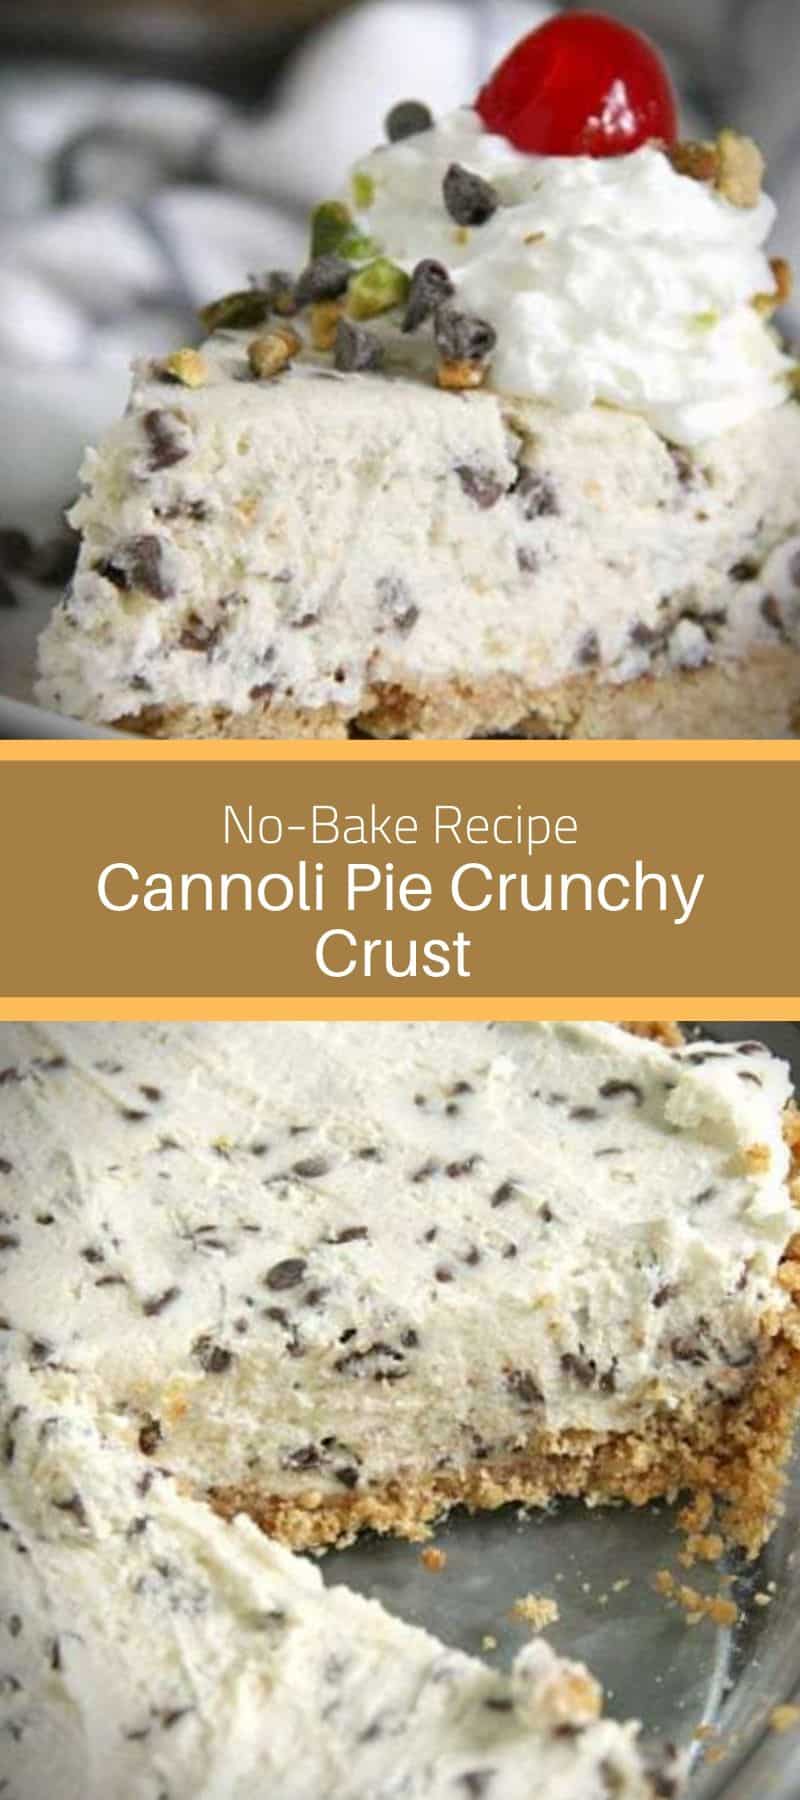 No-Bake Cannoli Pie Crunchy Crust Recipe 3